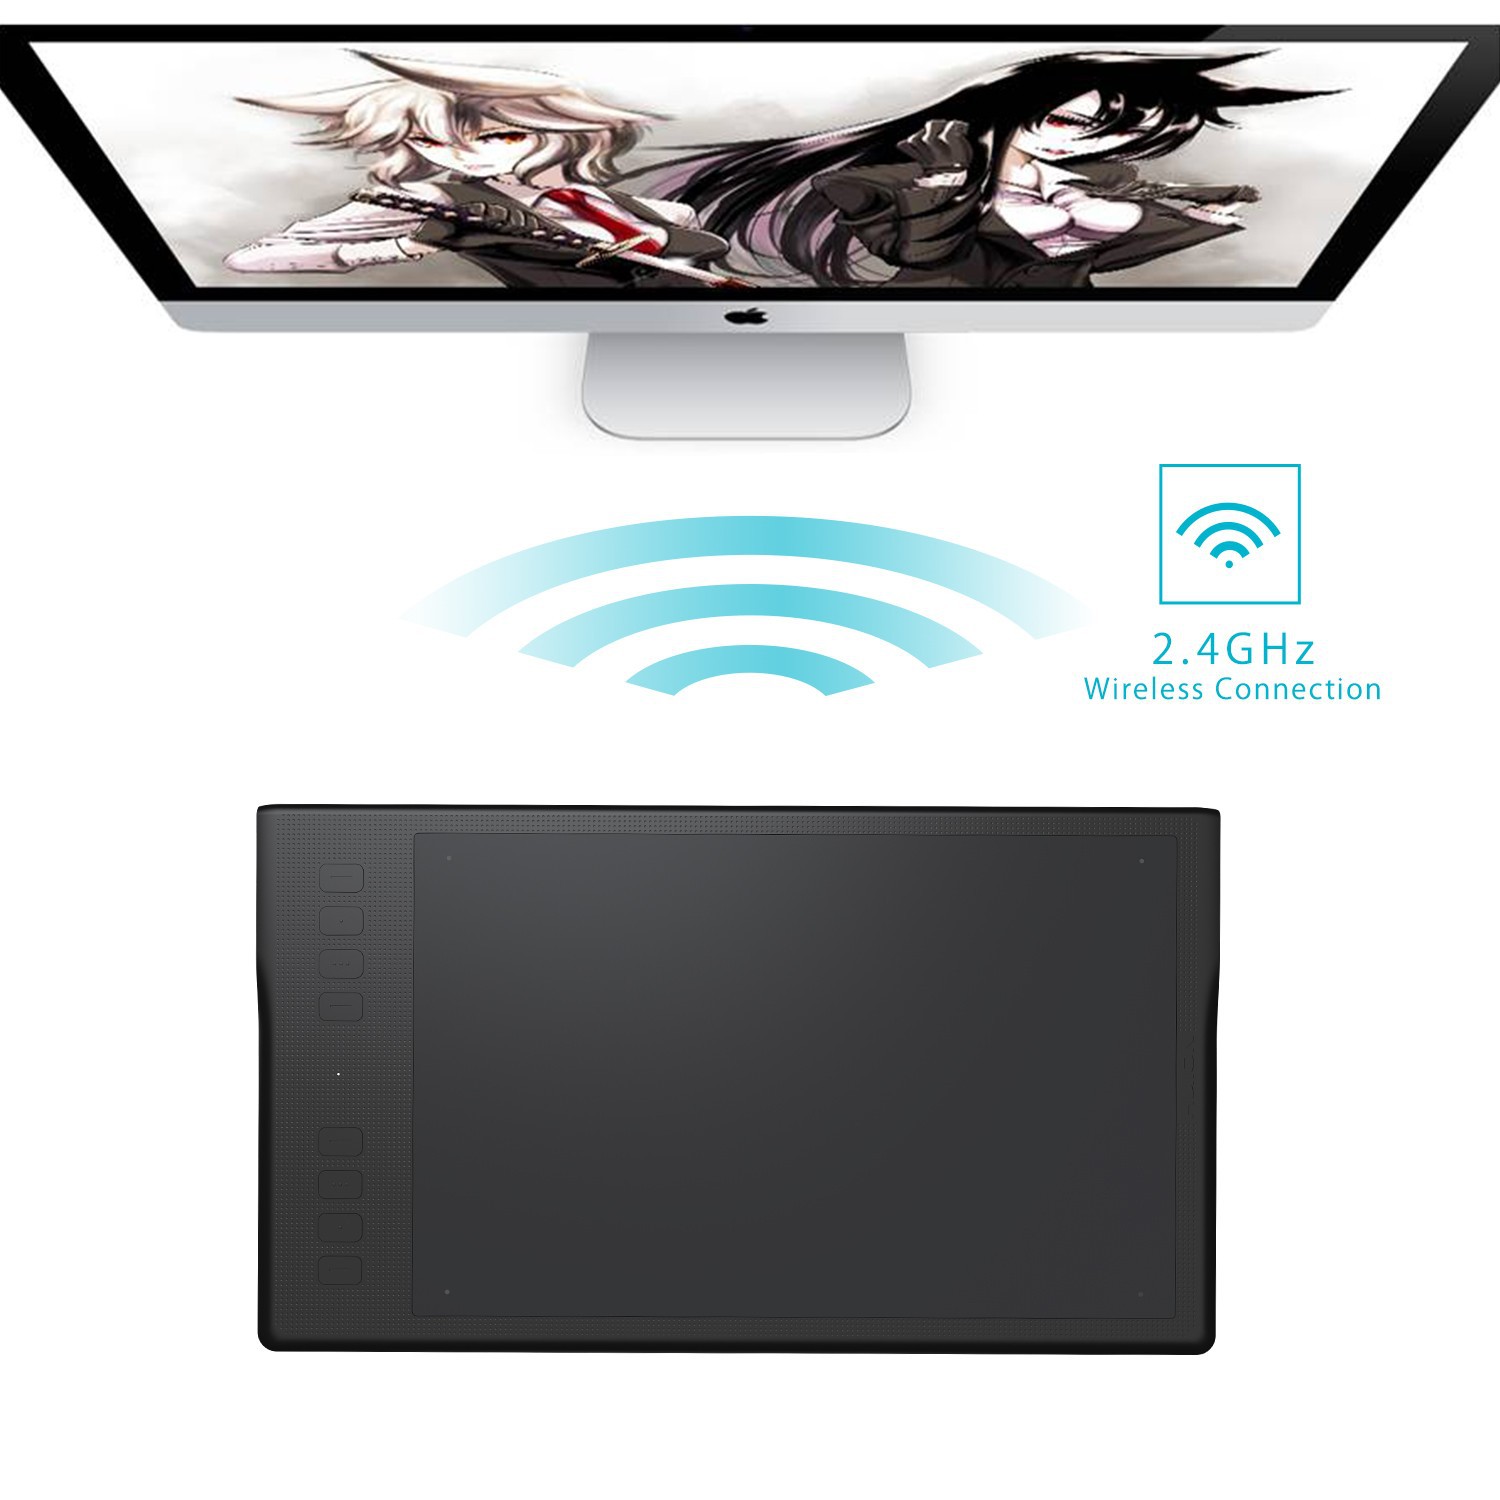 Графический планшет Huion Inspiroy Q11K Black (279x174мм, 5080lpi, 8192 уровня, 233 PPS, Wi-Fi, USB)